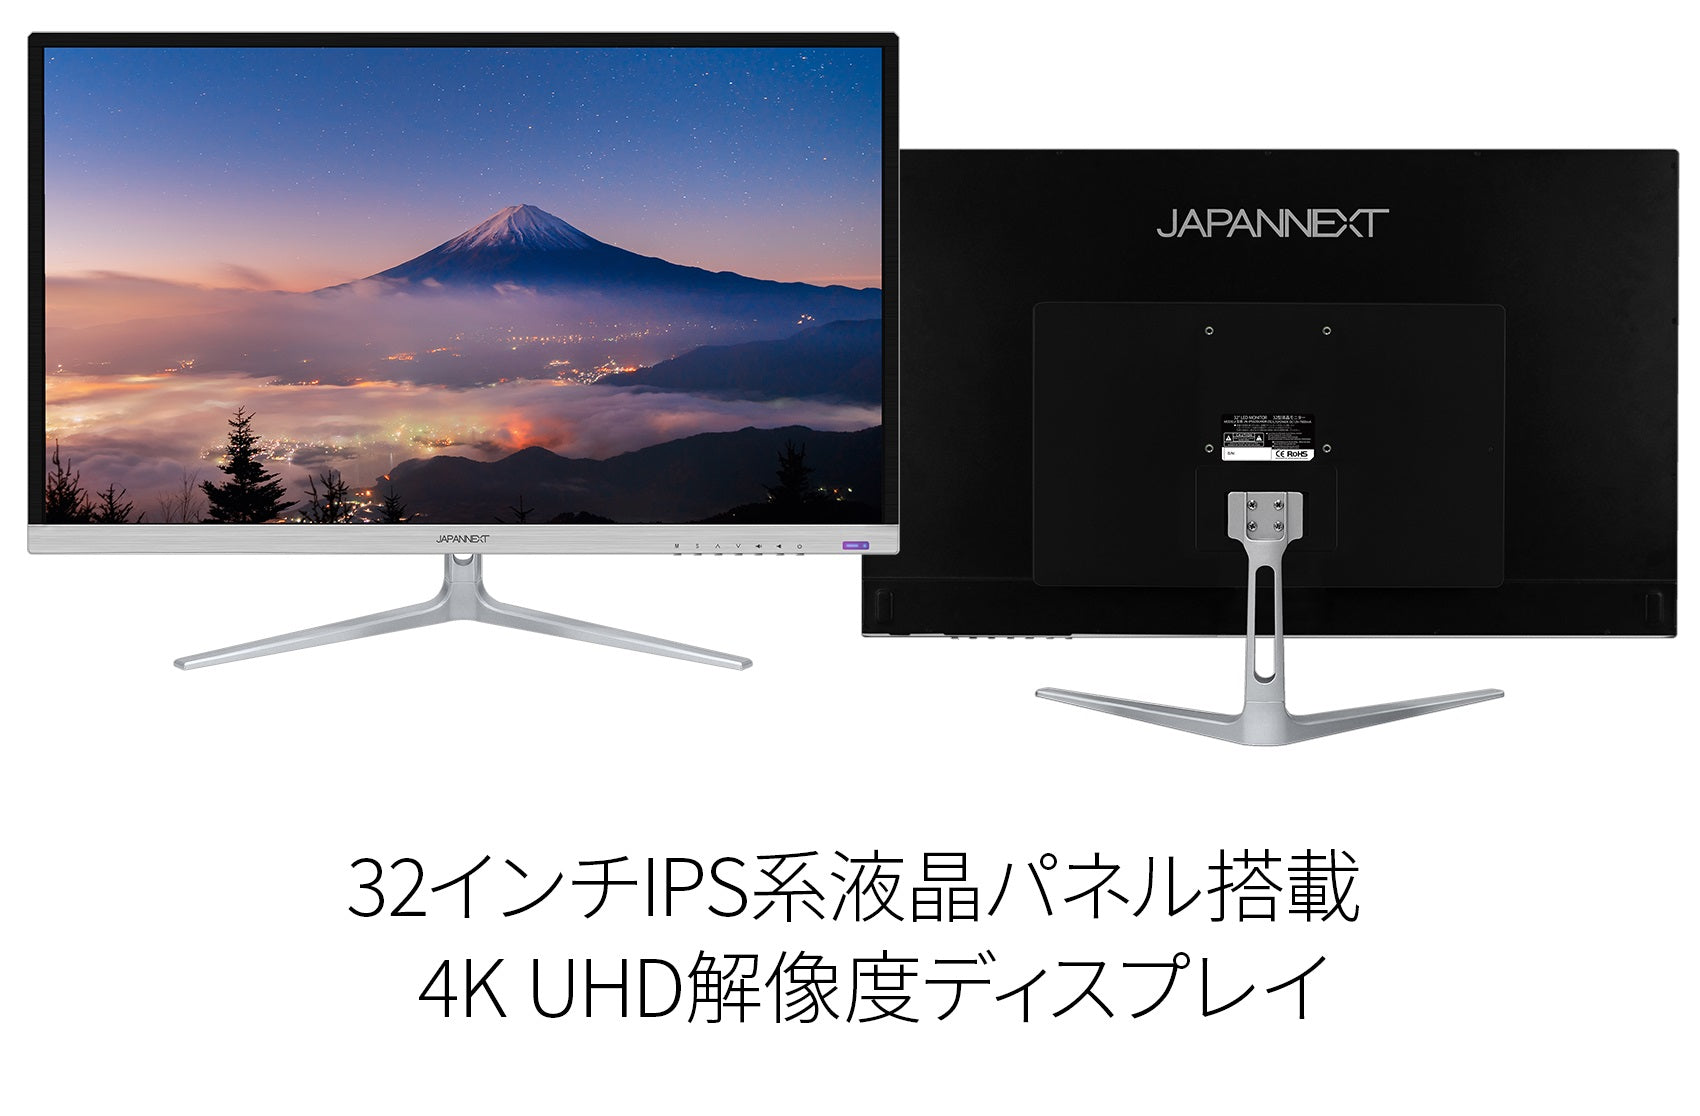 JAPANNEXT 32インチIPS系パネル搭載 4K解像度（3840x2160）液晶